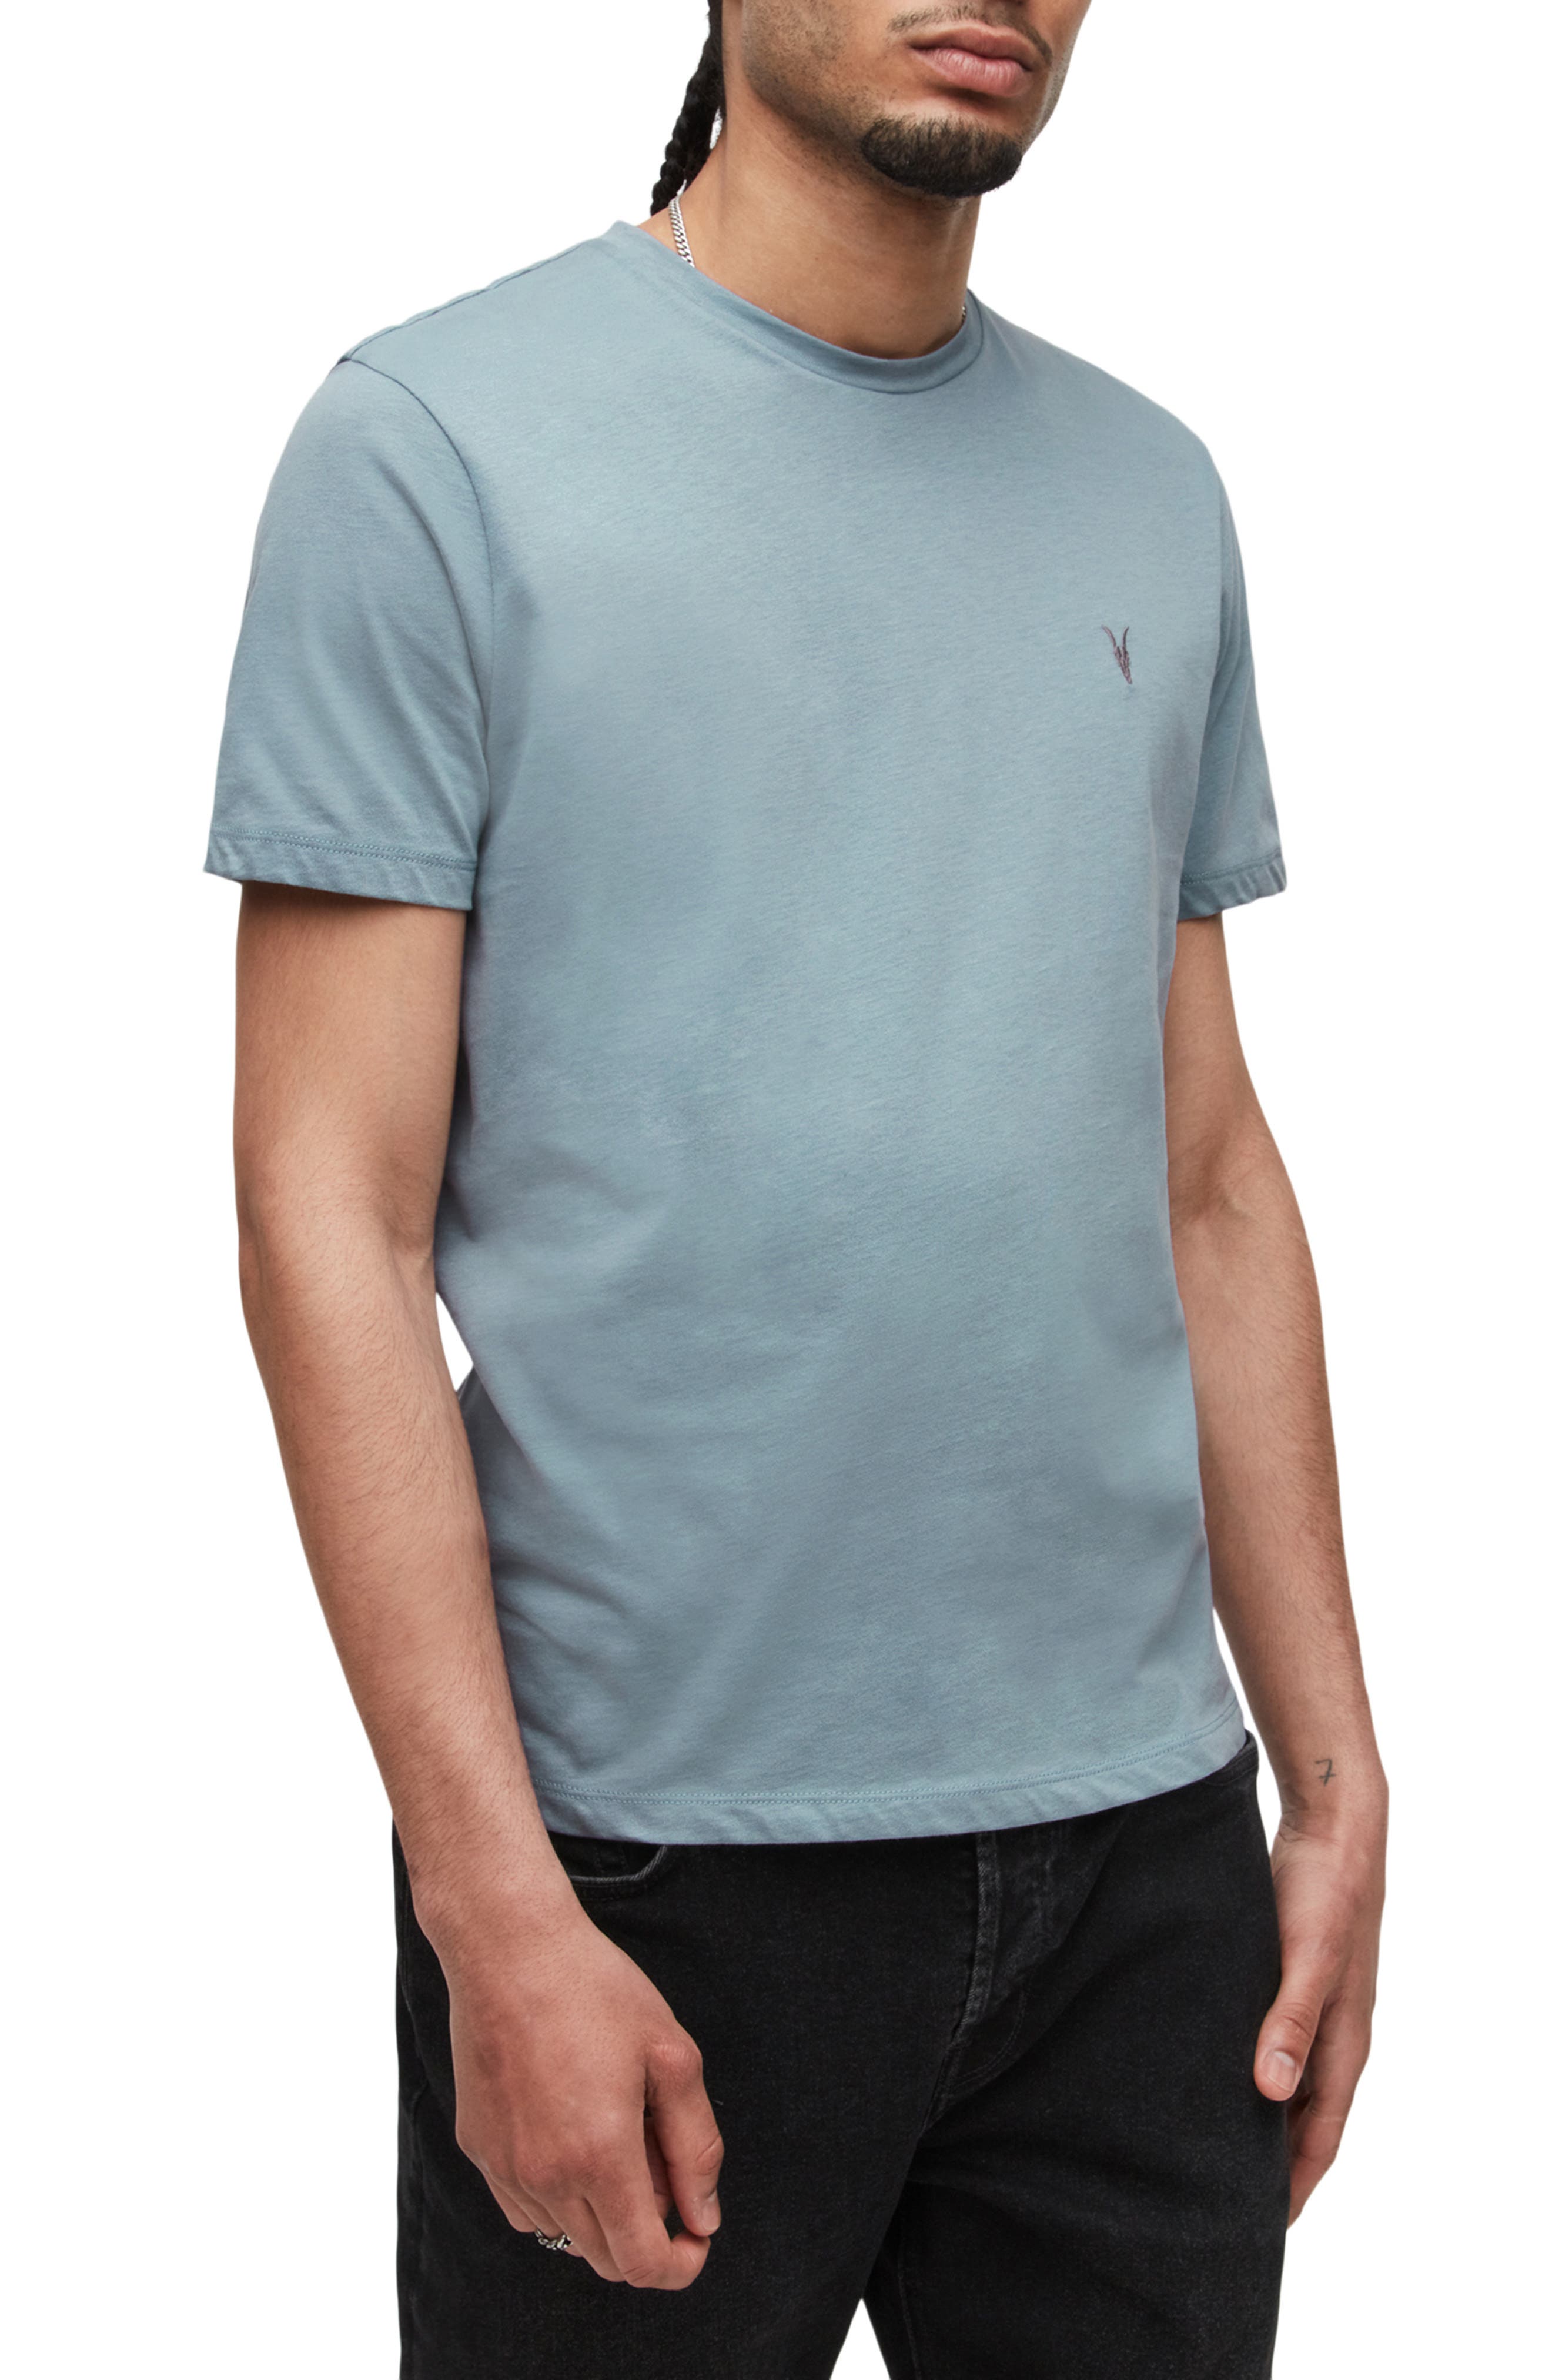 All Saints Mens Crew Neck Cotton Designer Tonic Green Khaki T Shirt Tee New 